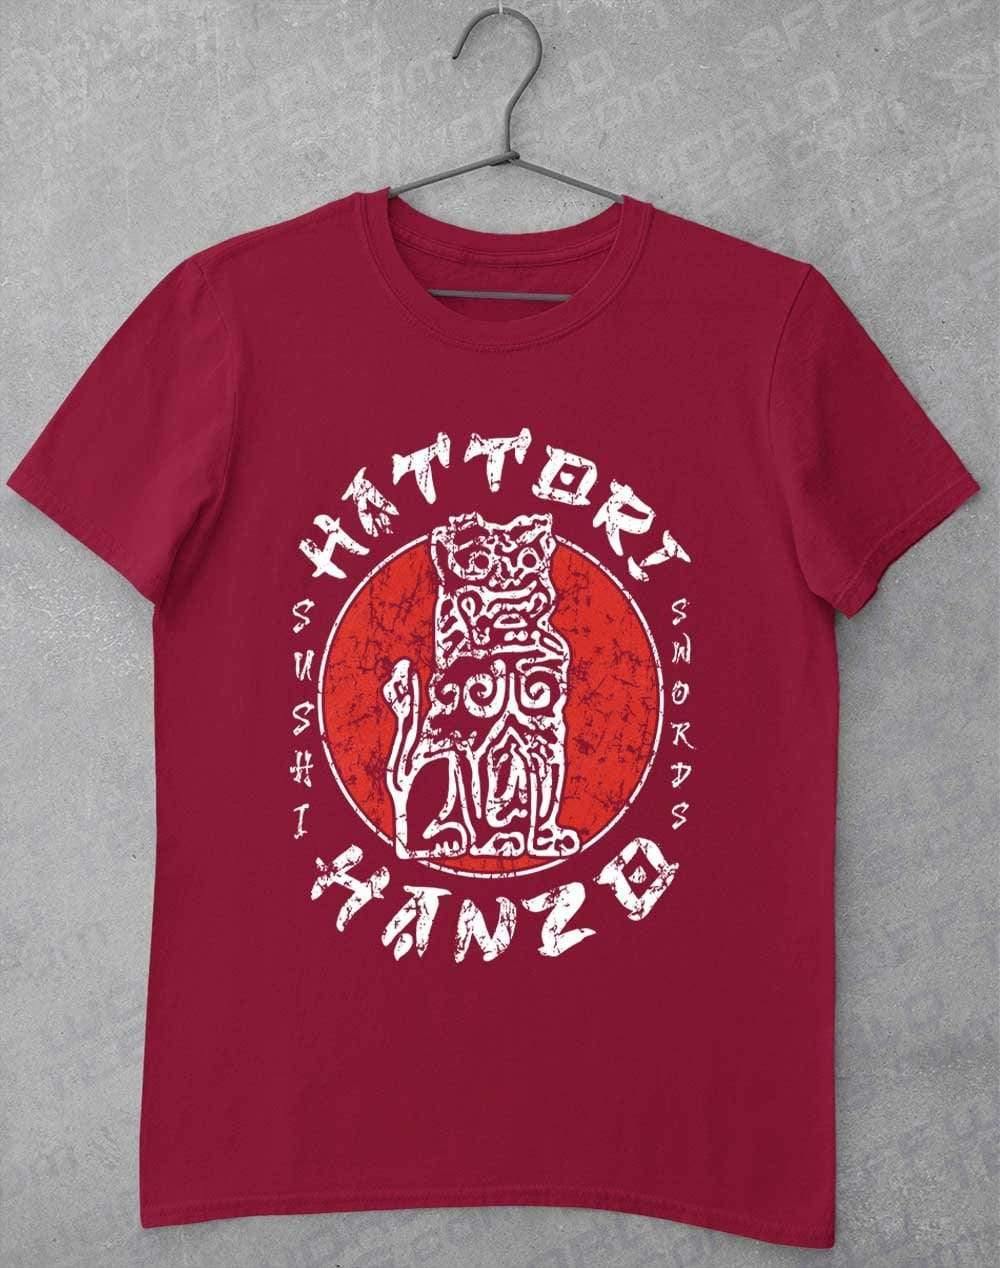 Hattori Hanzo T-Shirt S / Cardinal Red  - Off World Tees